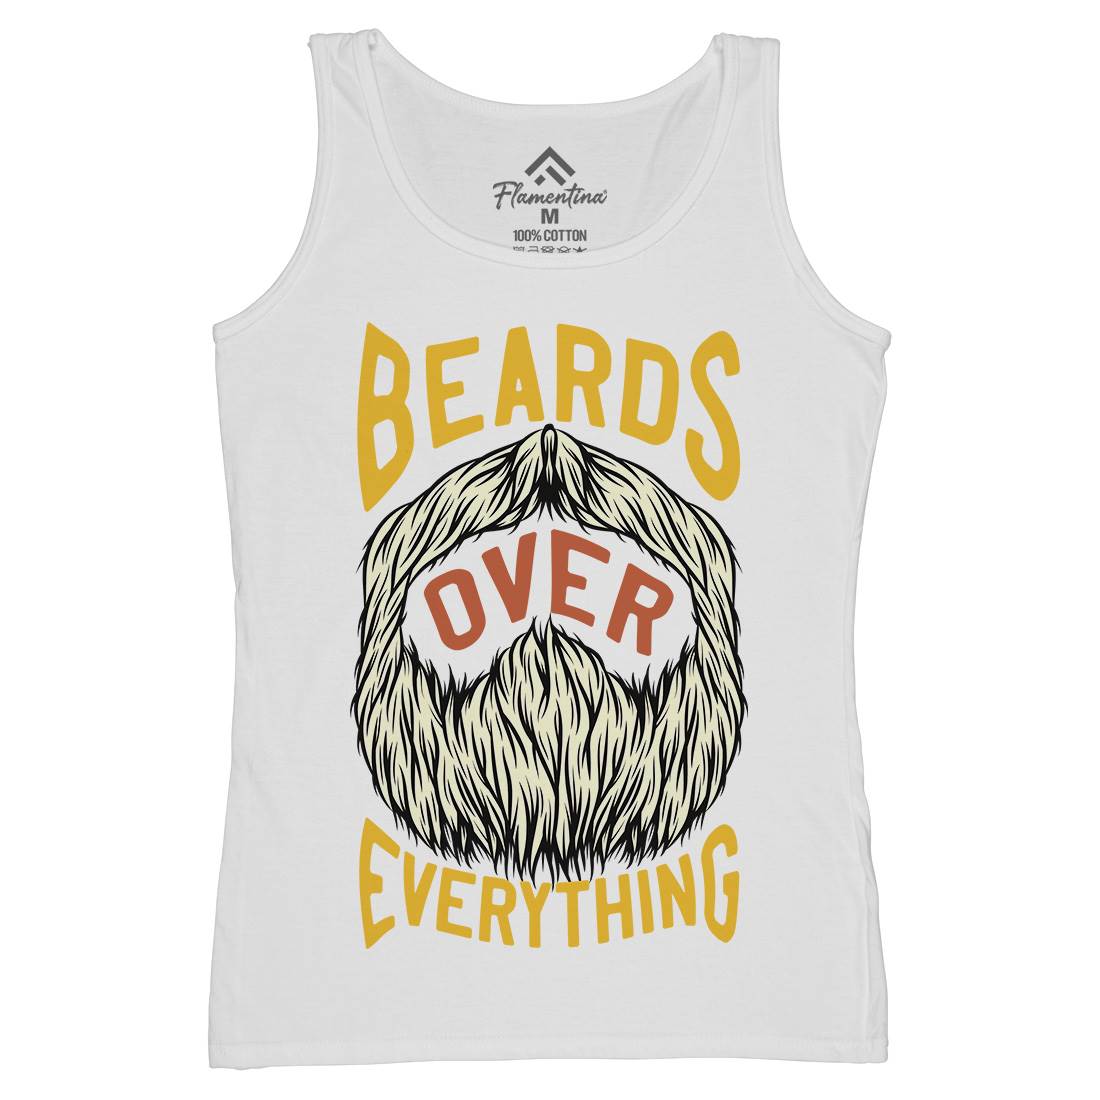 Beards Over Everything Womens Organic Tank Top Vest Barber C803